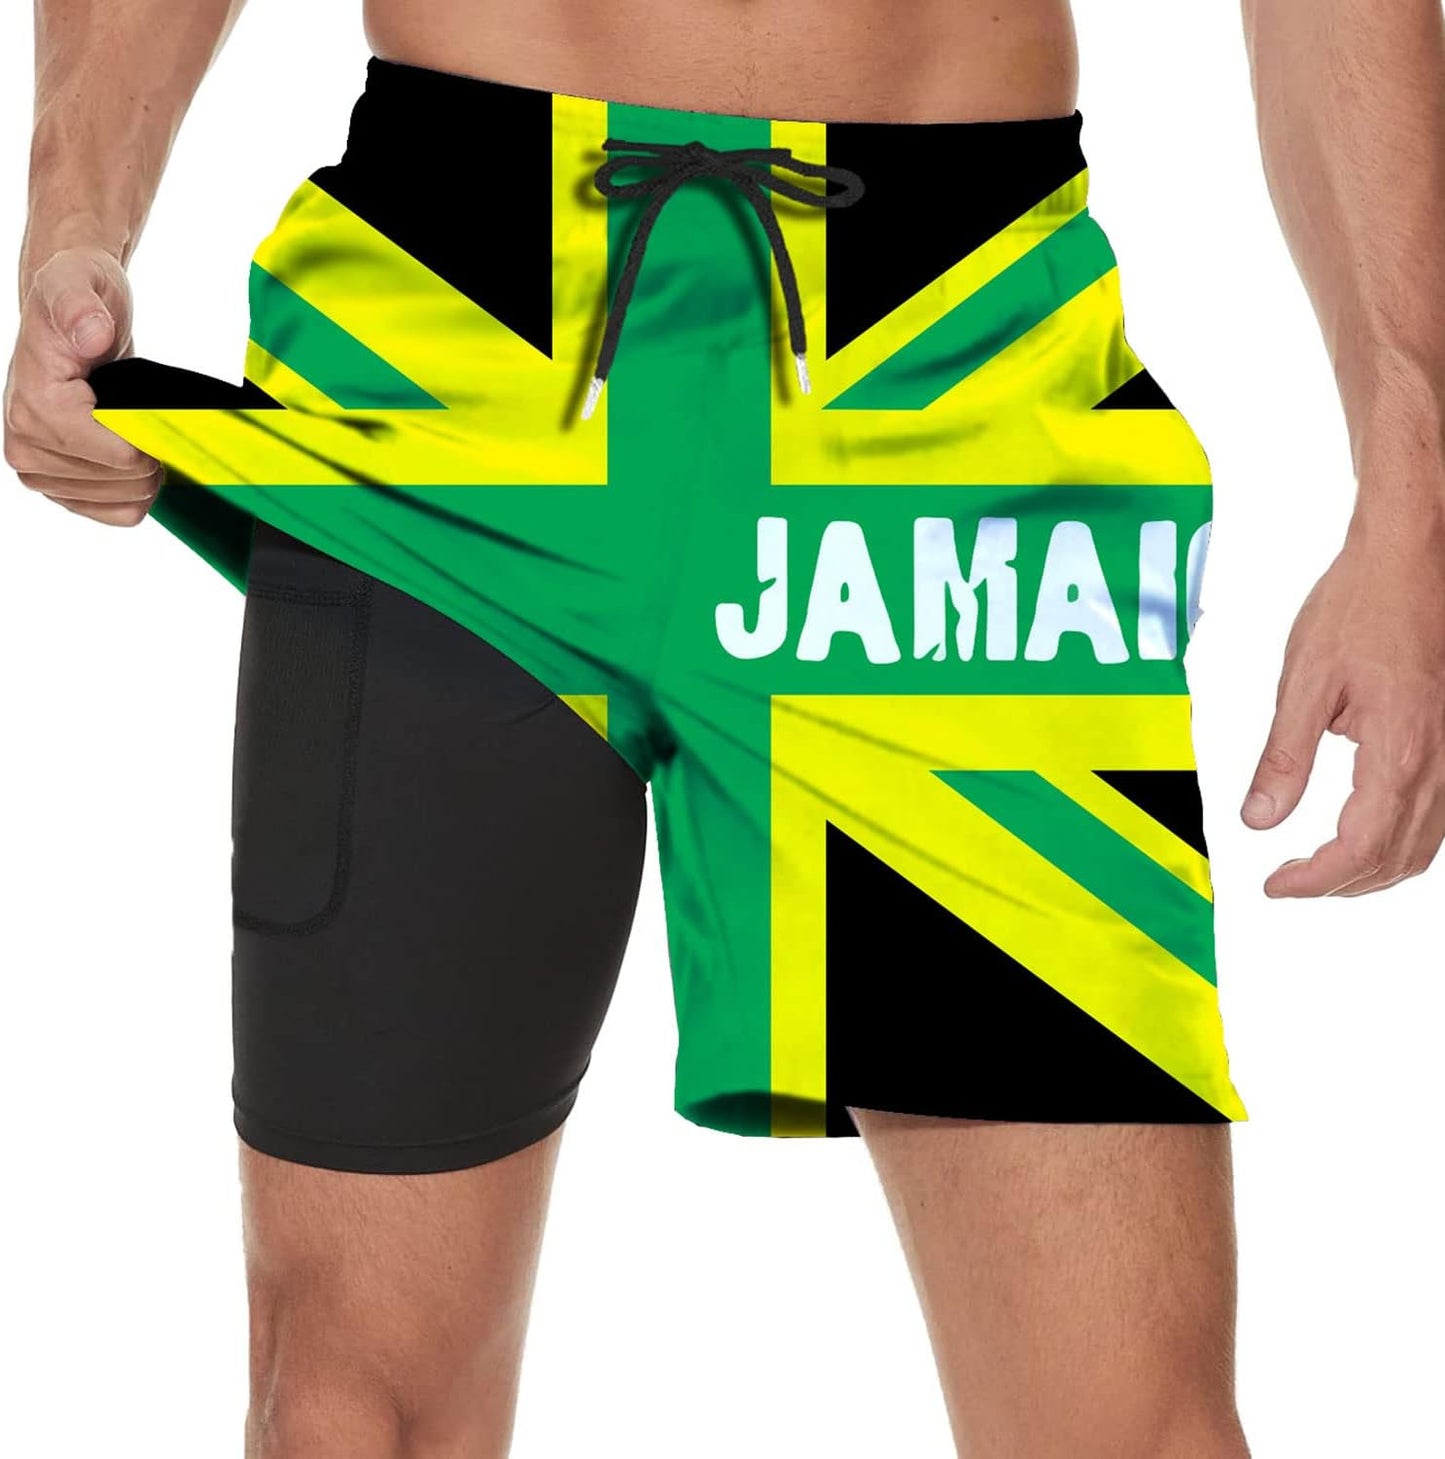 Jamaica Jamaican Kingdom Flag Men's Summer Beach Shorts, Athletic Trunks